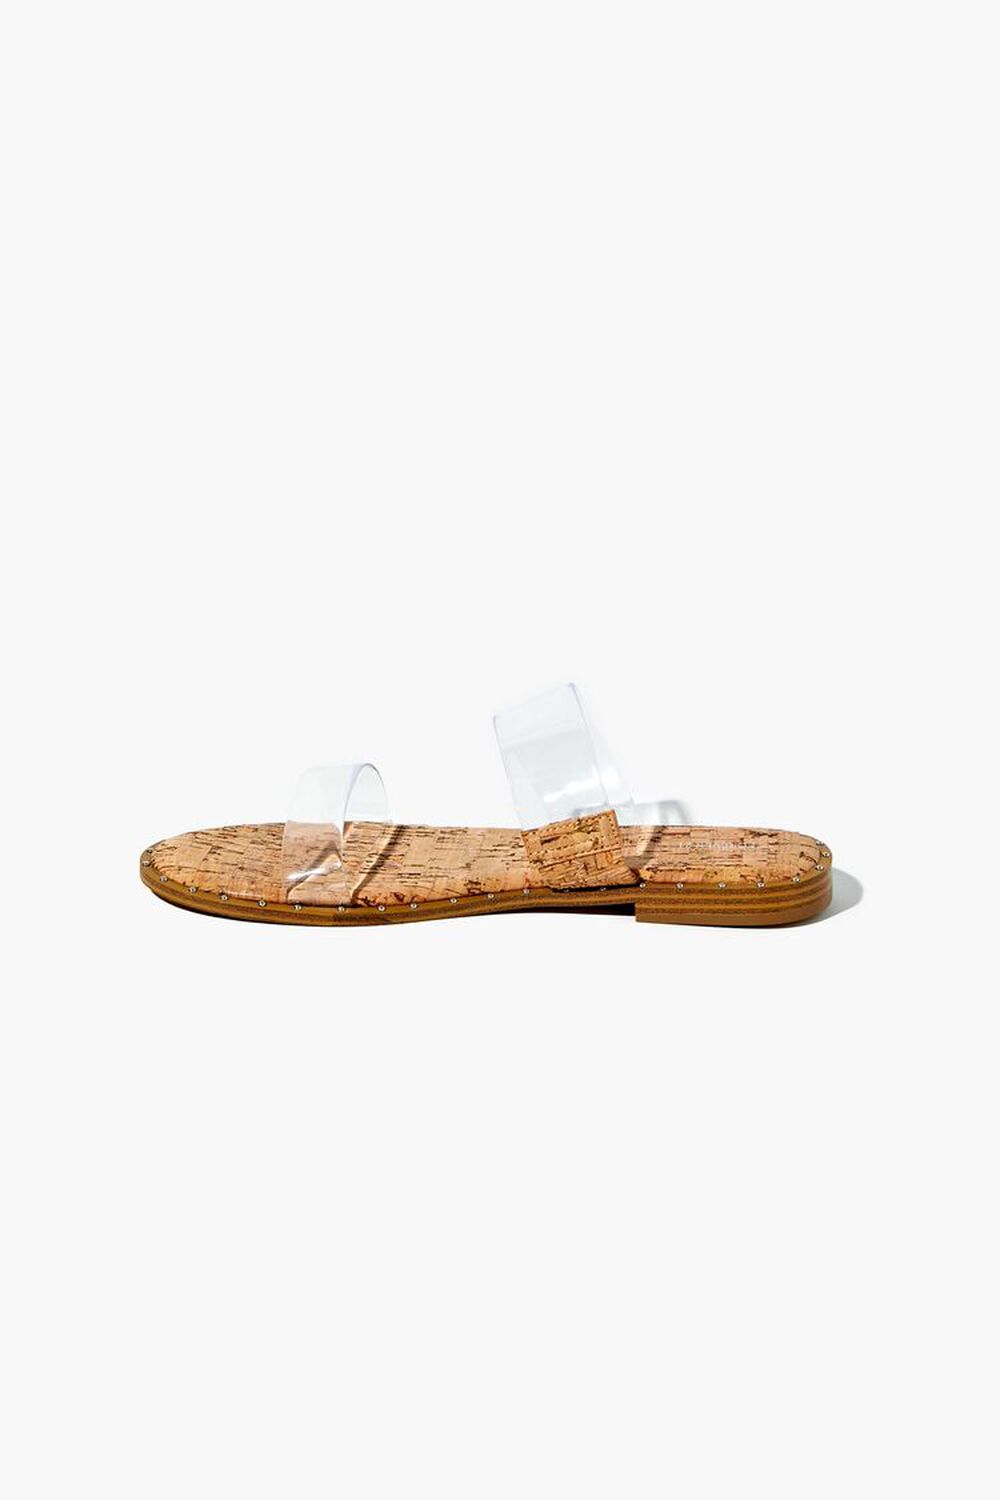 NATURAL Dual-Strap Cork Sandals, image 2